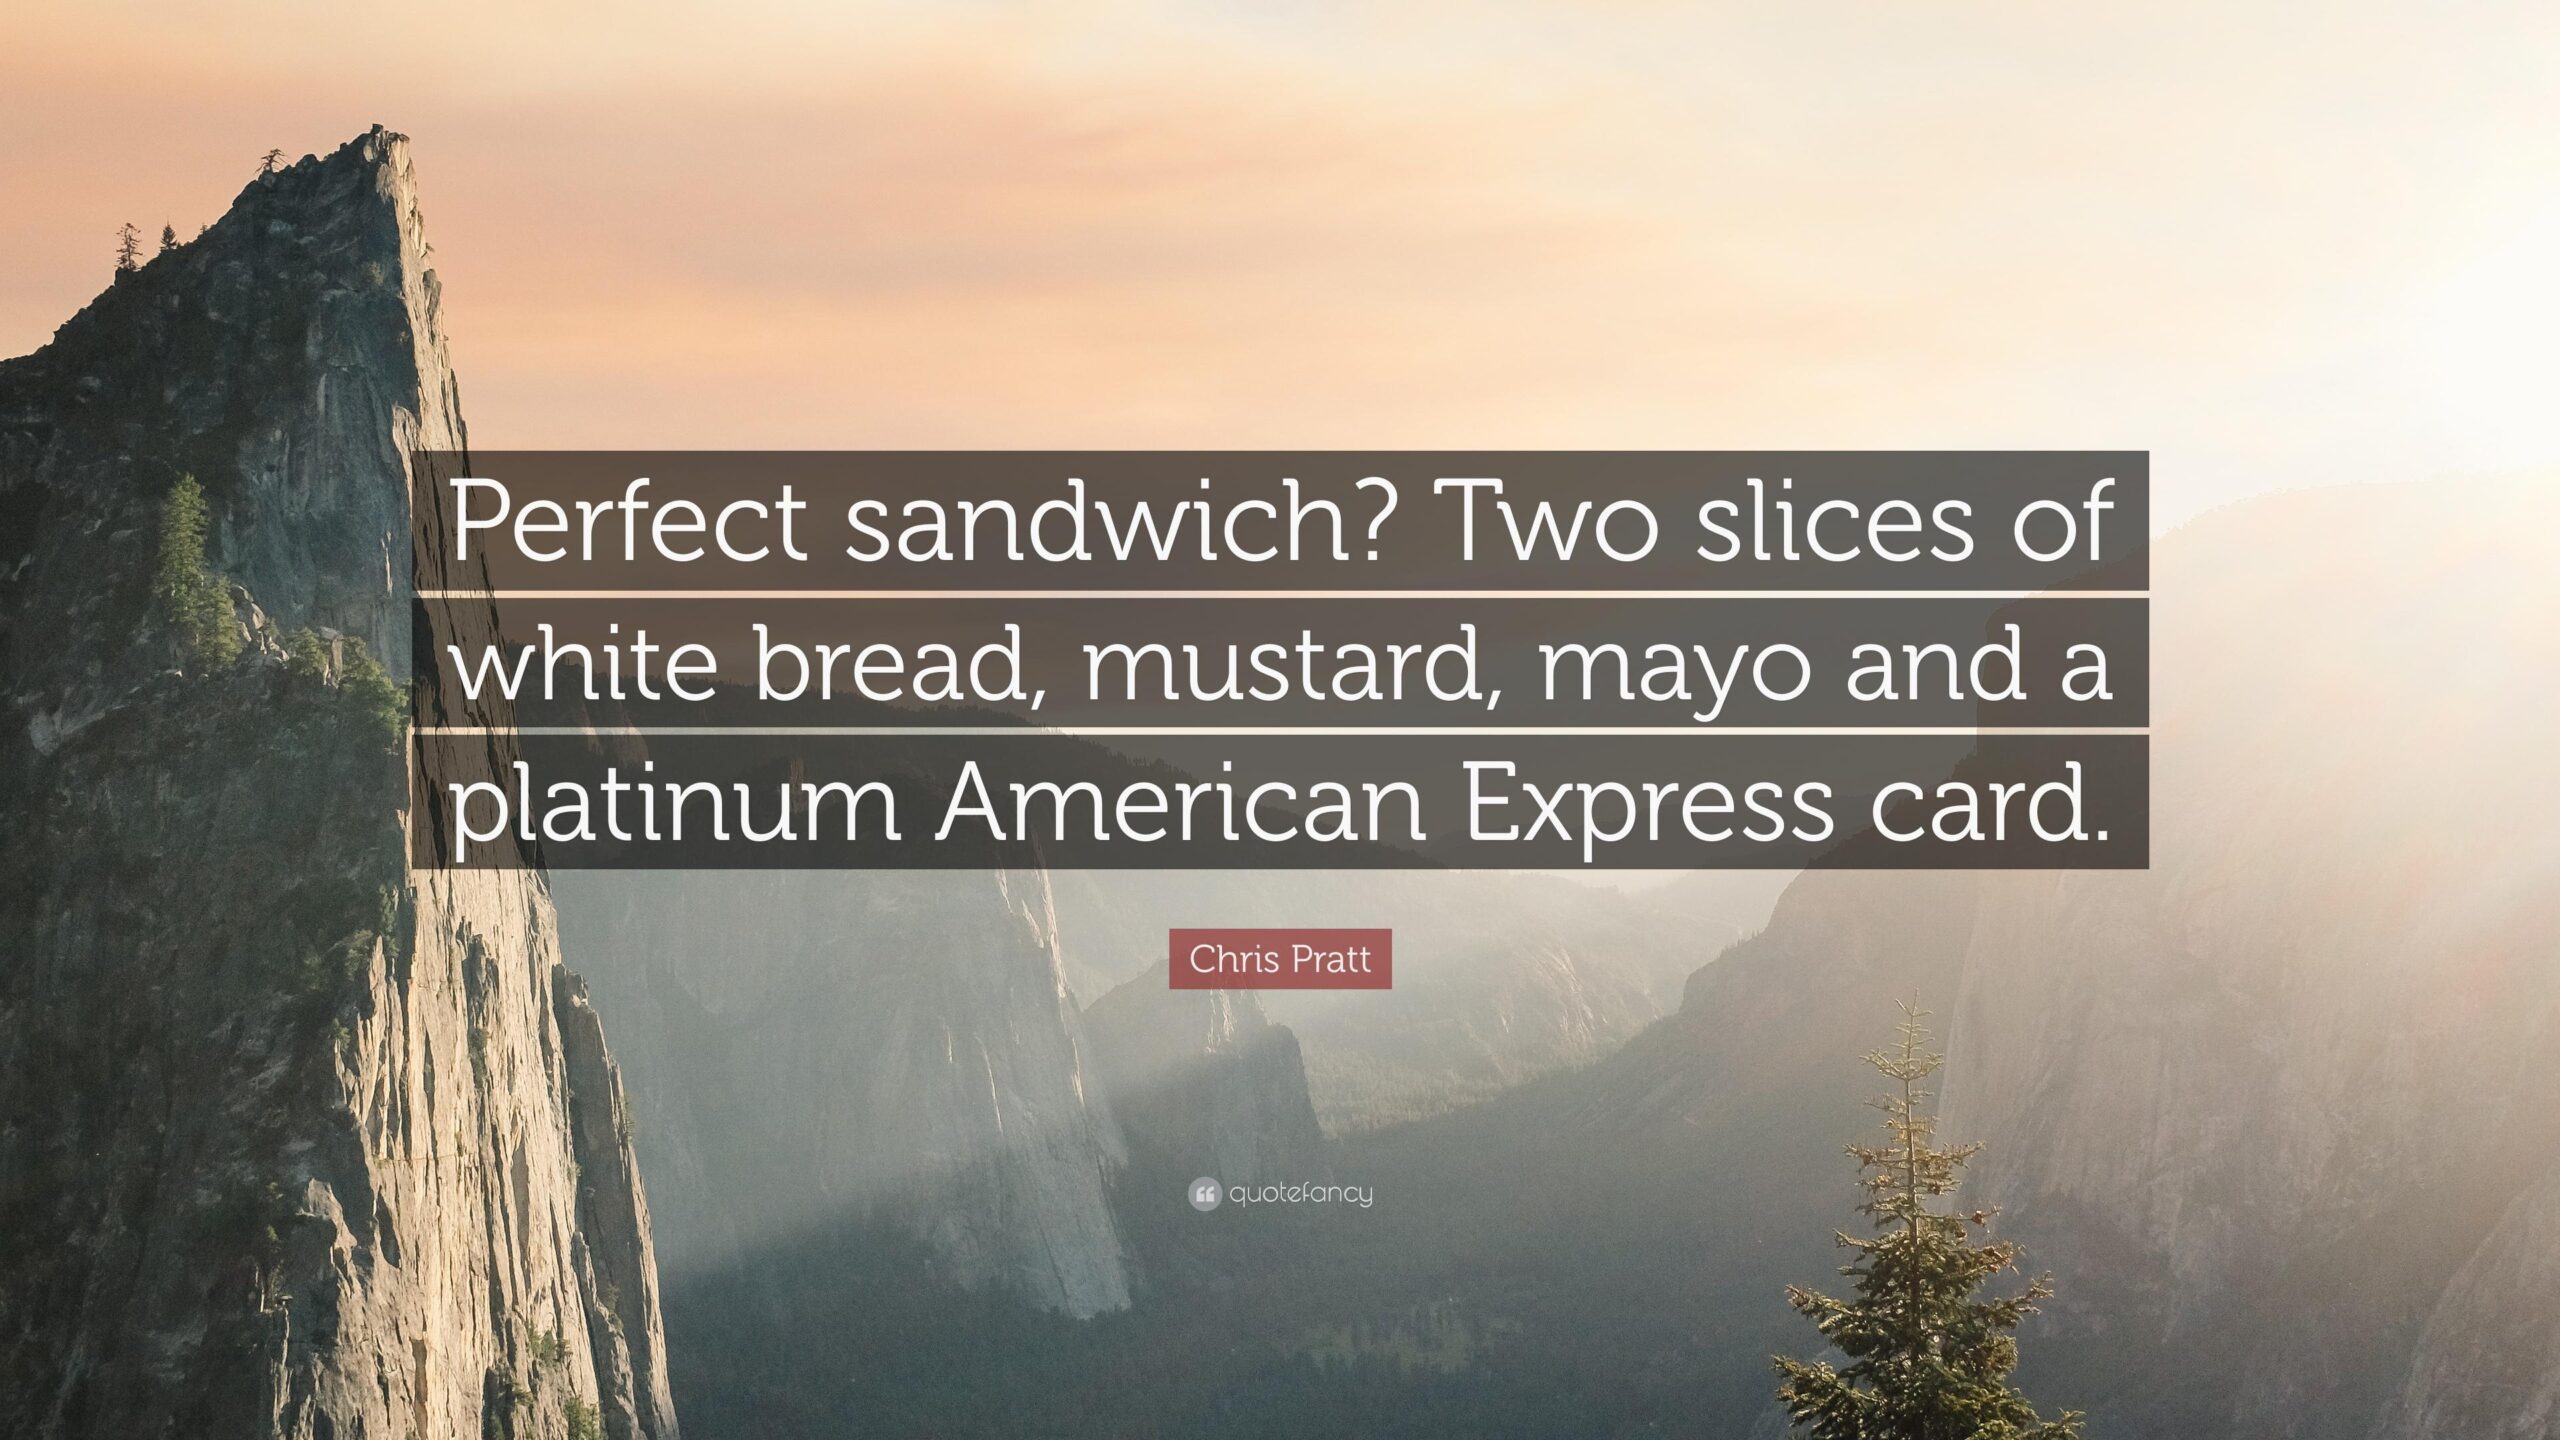 Chris Pratt Quote “Perfect sandwich? Two slices of white bread